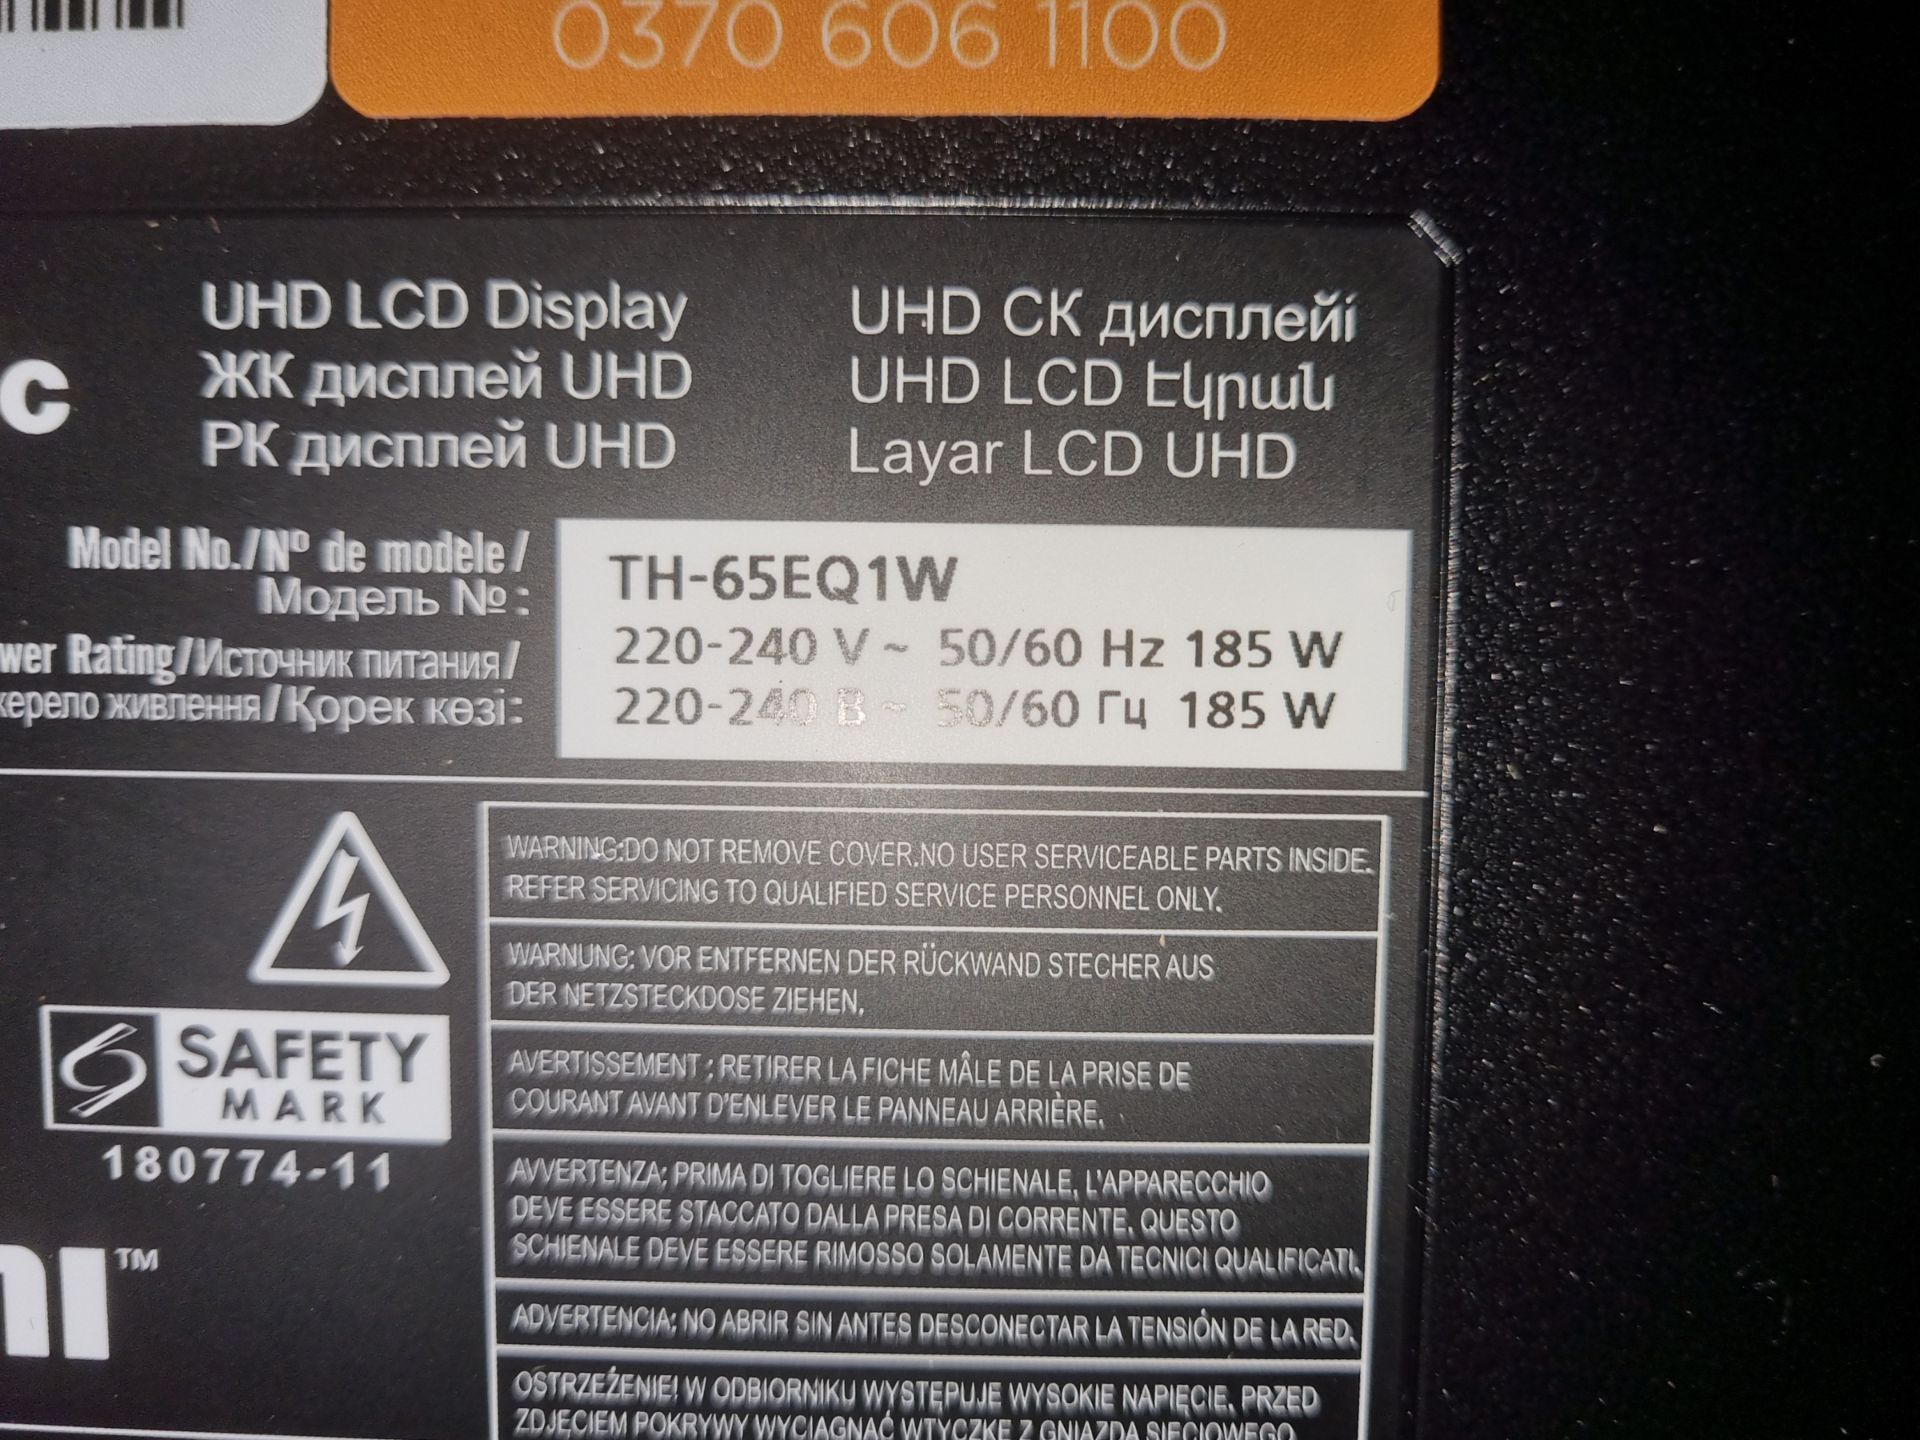 Panasonic TH-65EQ1W UHD LCD display television & Flight case - L160 x W42 x H109cm - Image 5 of 7